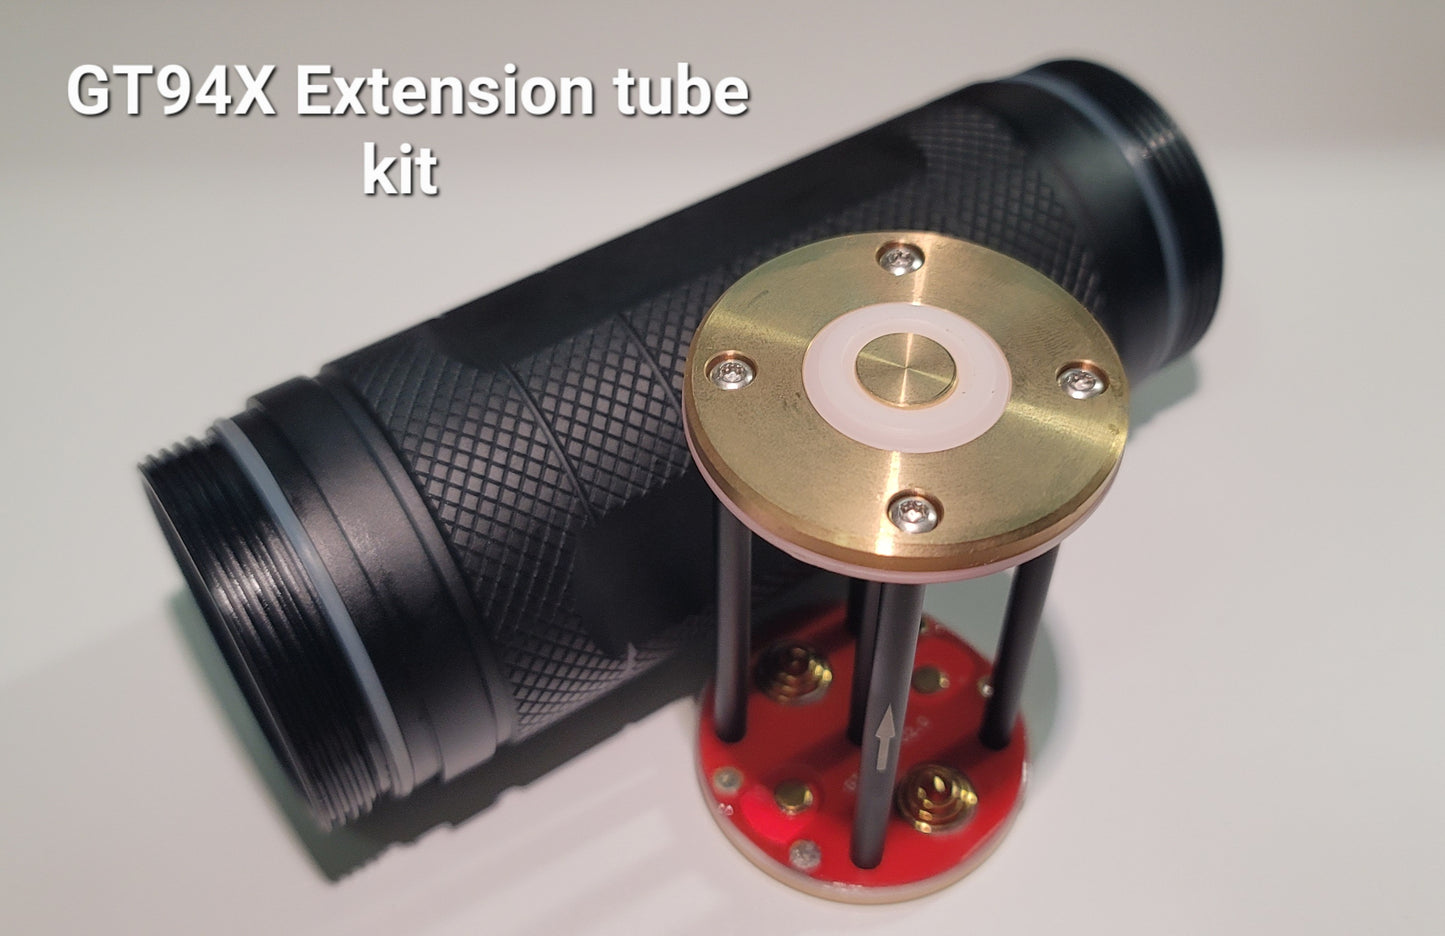 Lumintop GT94X Extension Tube